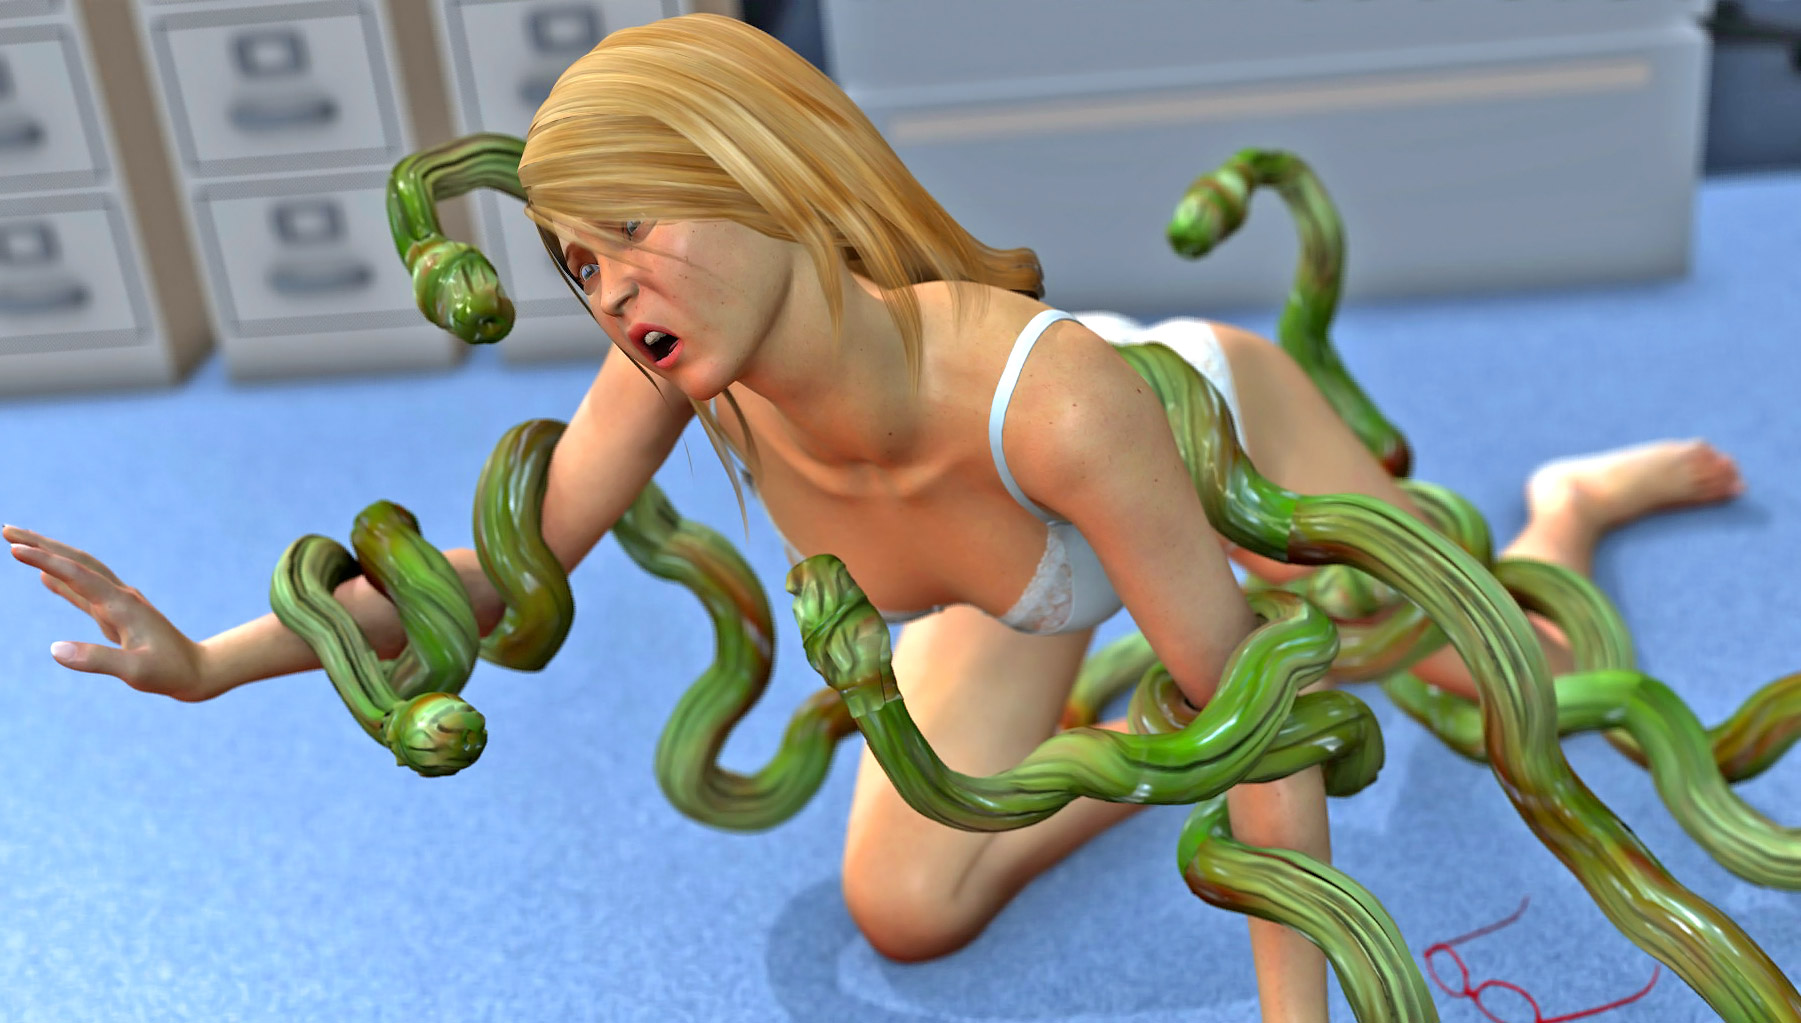 Tenticle Sex Office Girl - Green tentacle monster drilling a helpless girl | 3dwerewolfporn.com